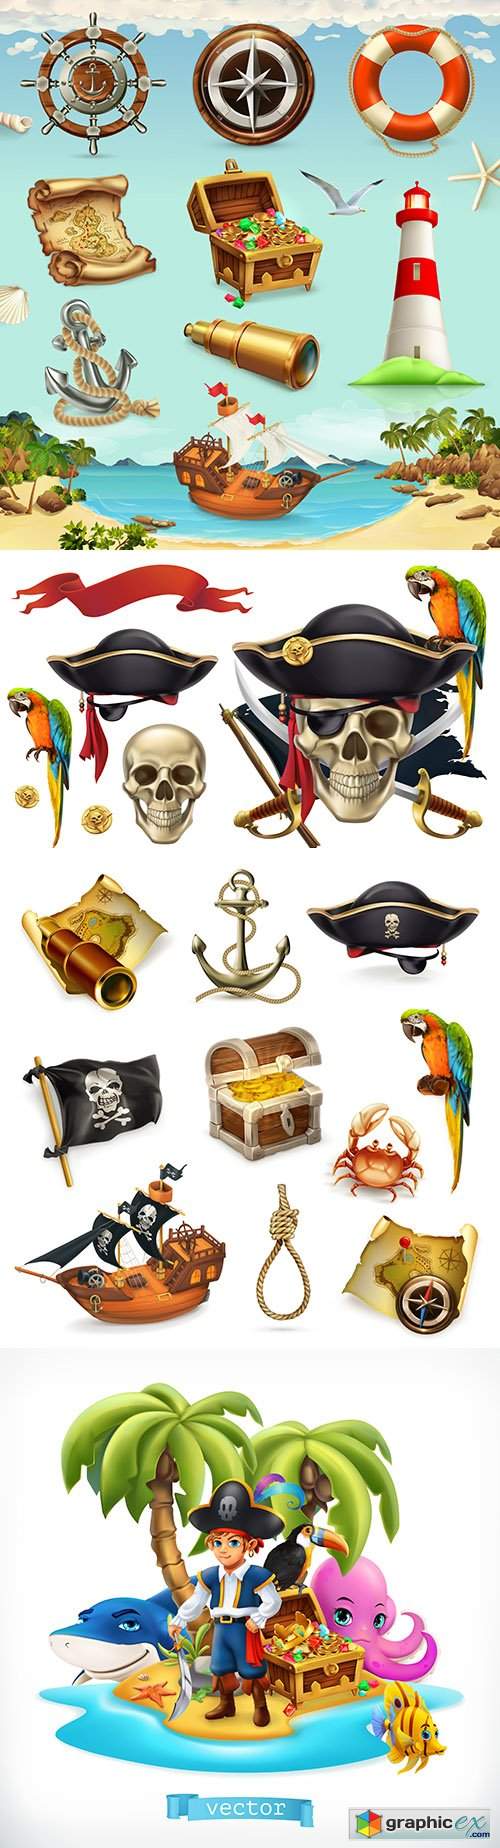  Sea adventure and pirate set vintage items 3d illustration 